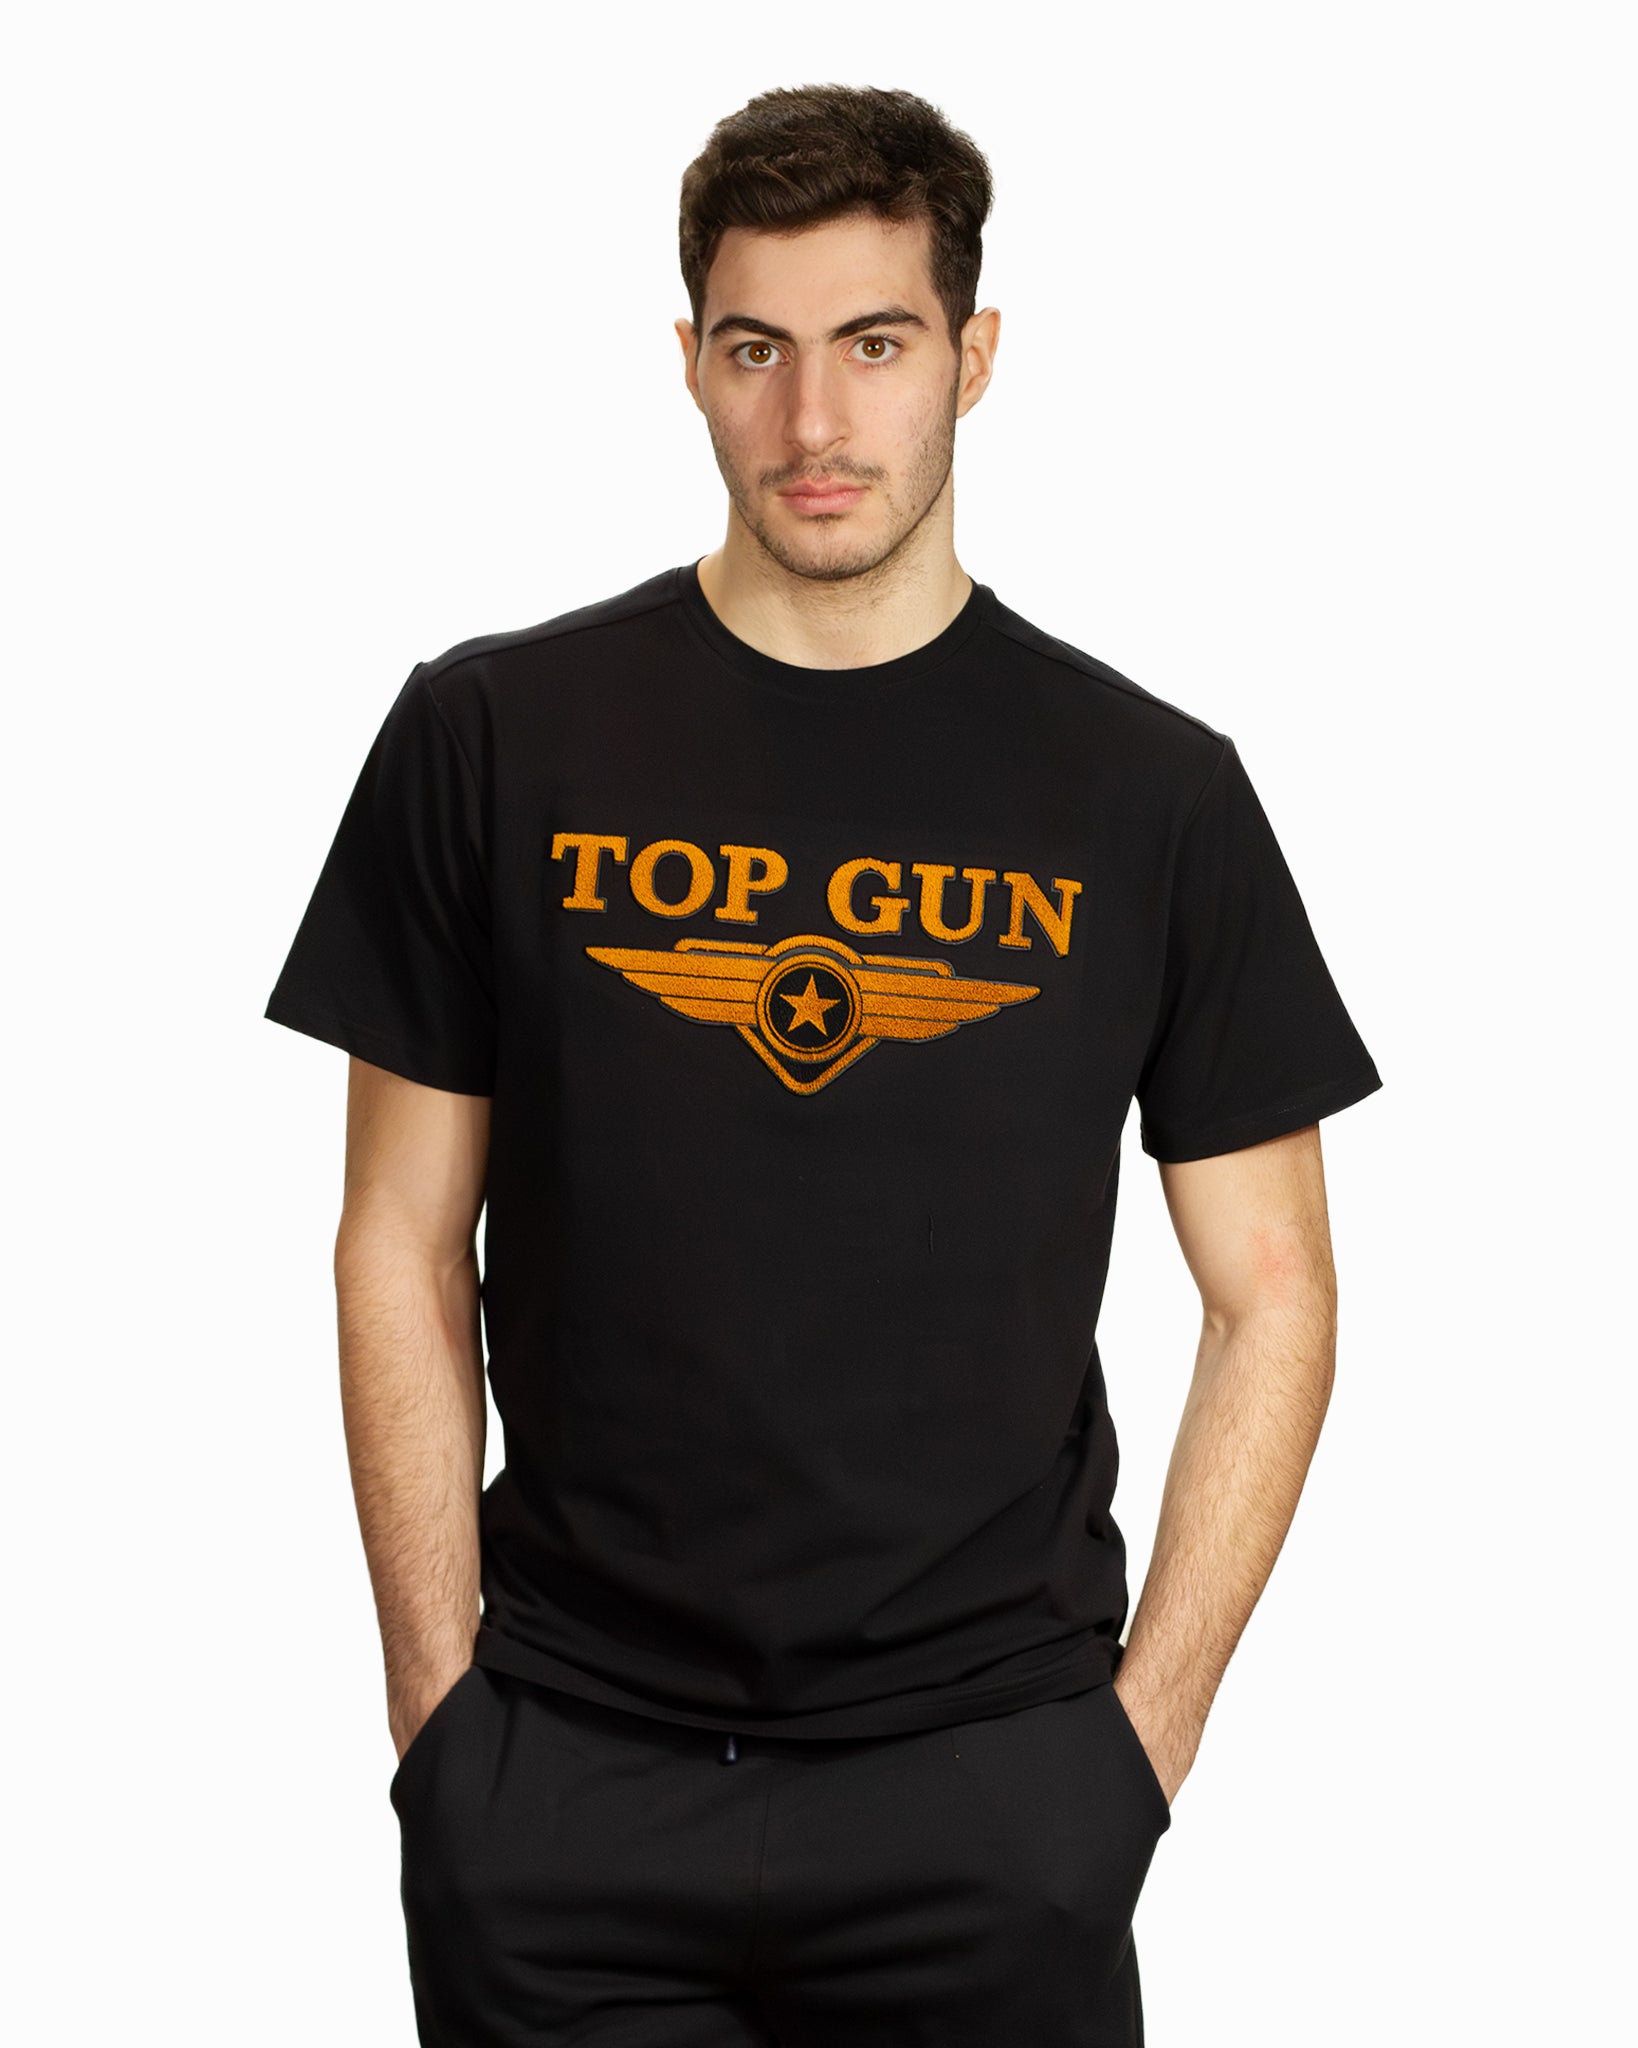 Clothing EMBROIDERED – LOGO GUN® TEE Top GUN Gun TOP GUN Original | | T-shirts TOP Store TOP